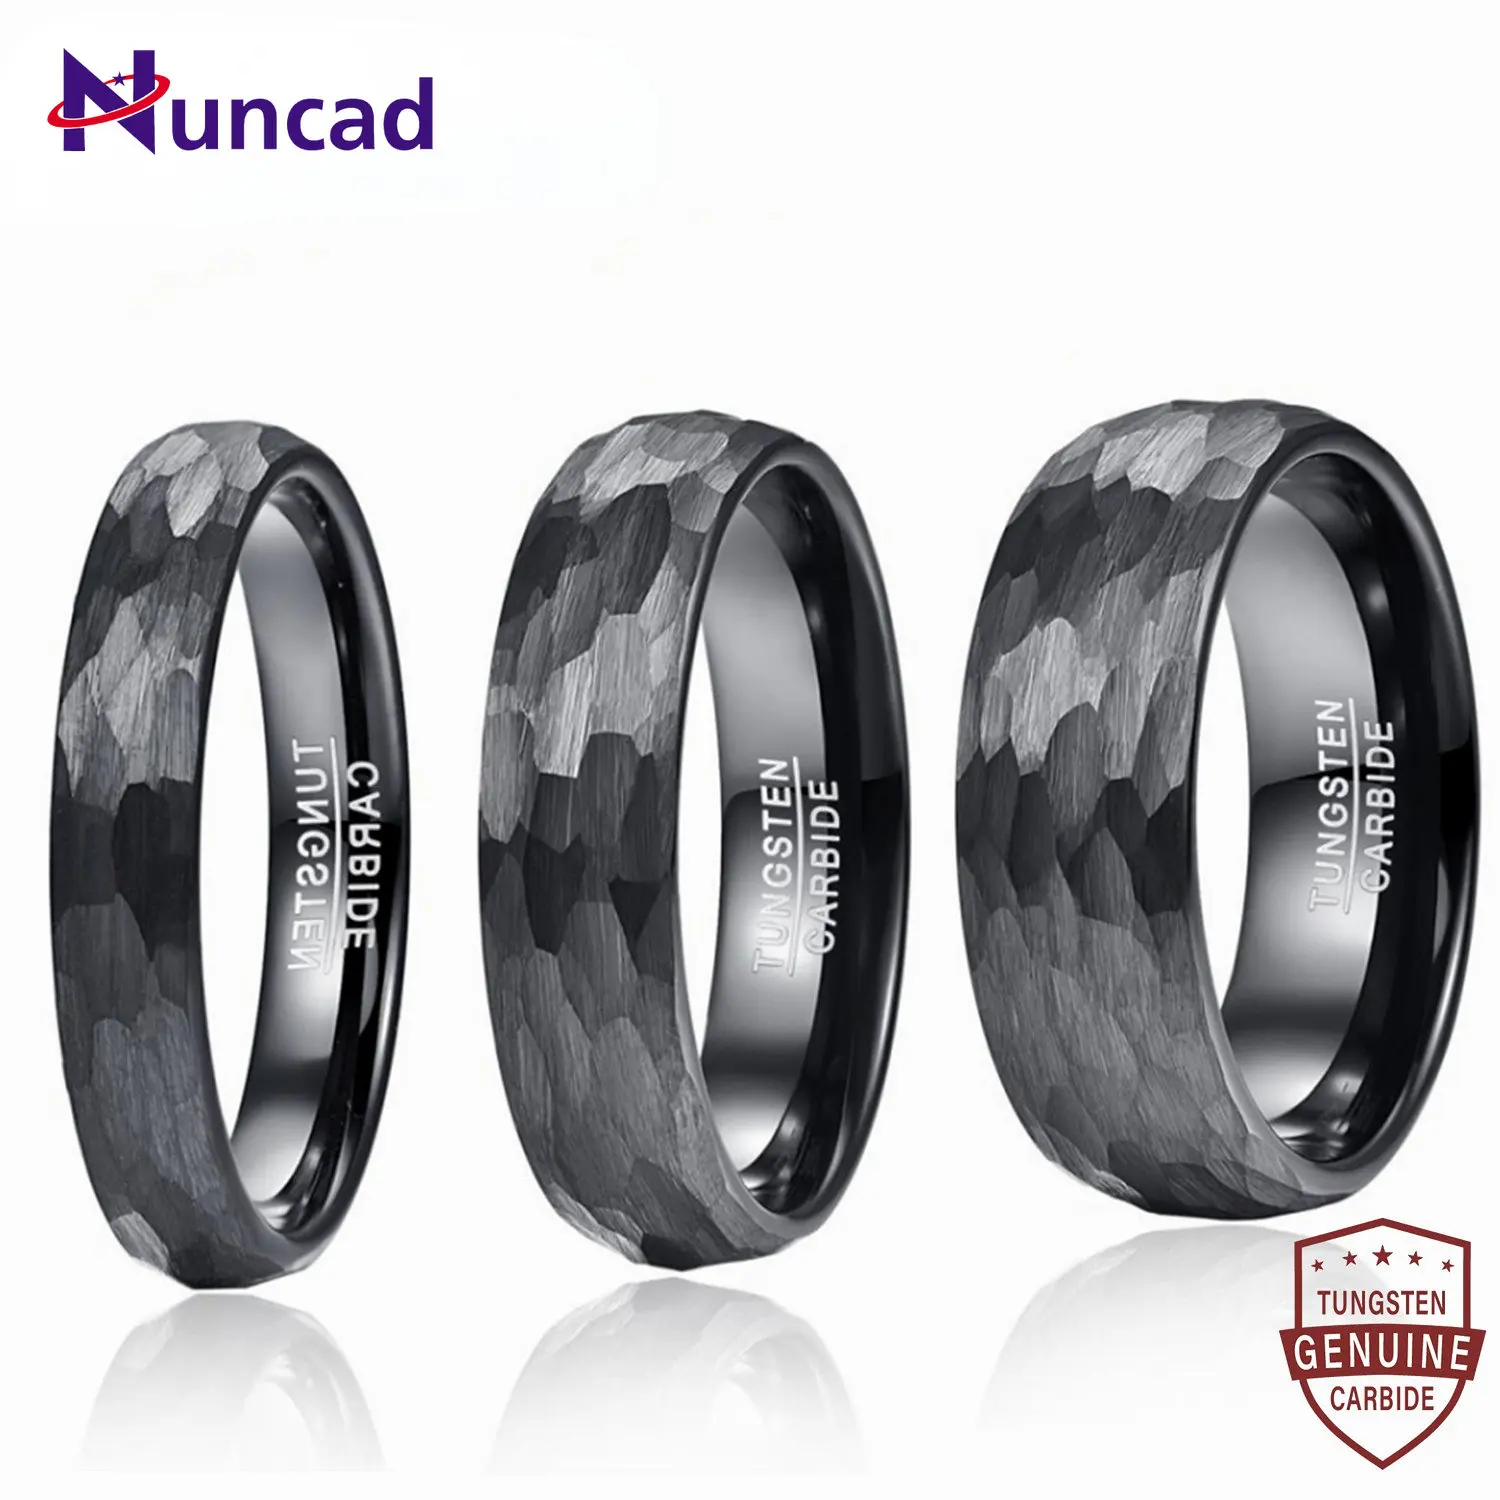 

NUNCAD 4mm 6mm 8mm Black Tungsten Carbide Ring Wedding Band For Men Multi-Faceted Hammered Brushed Finish Men Rings Gift